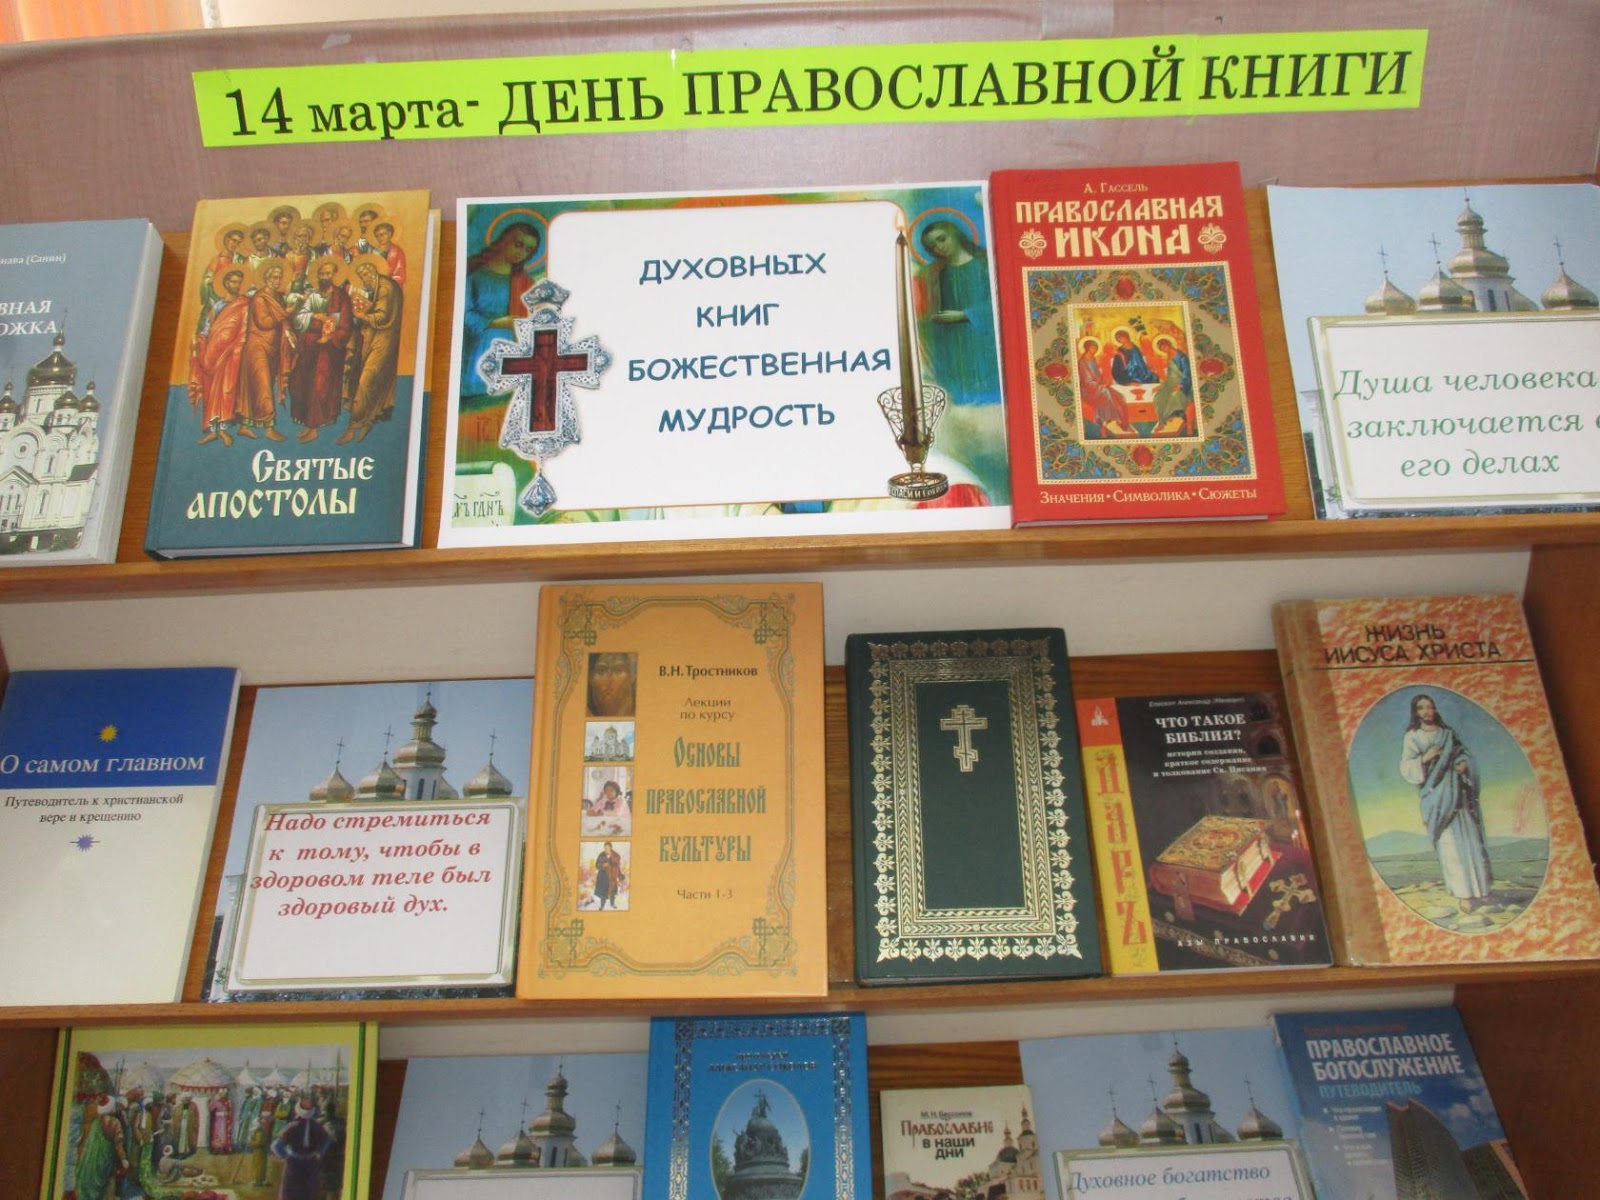 Название мероприятия православная книга